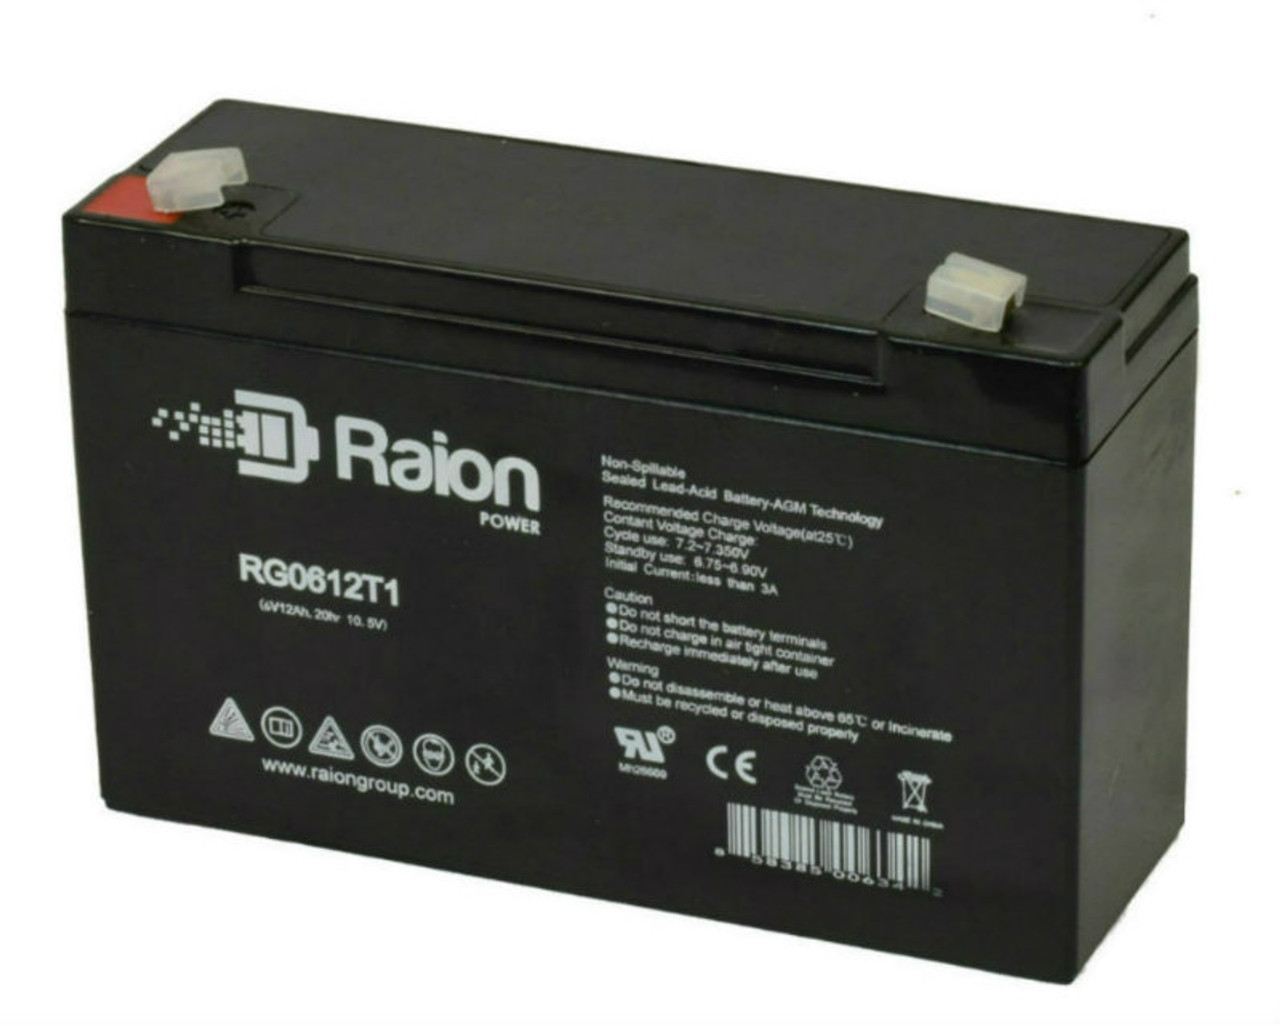 Raion Power RG06120T1 Replacement 6V 12Ah Emergency Light Battery for Light Alarms 2S12E3